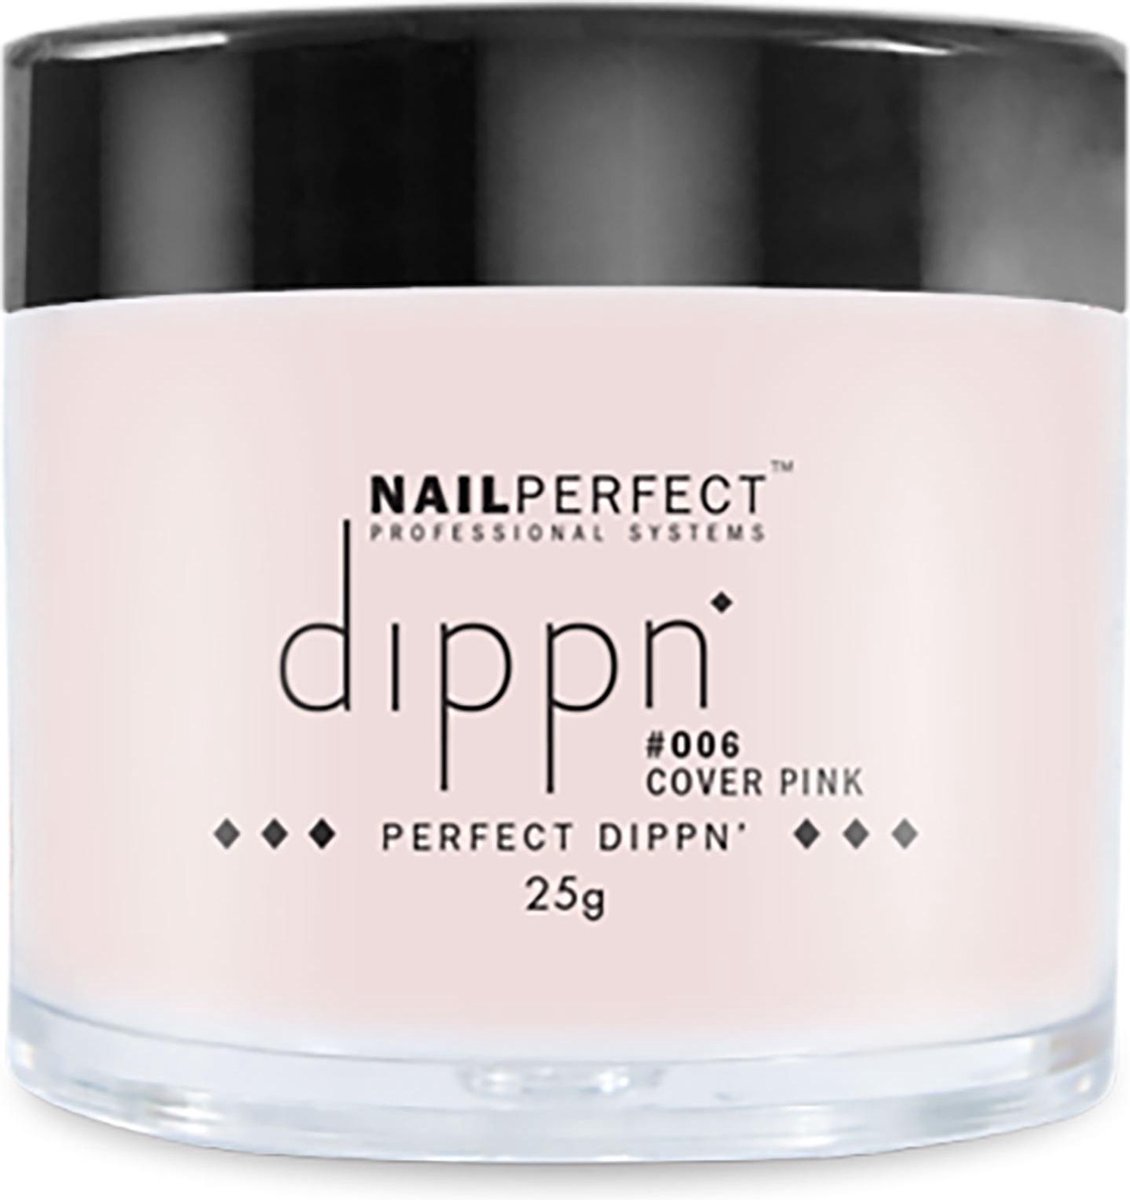 Dip poeder voor nagels - Dippn Nailperfect - 006 Cover Pink - 25gr